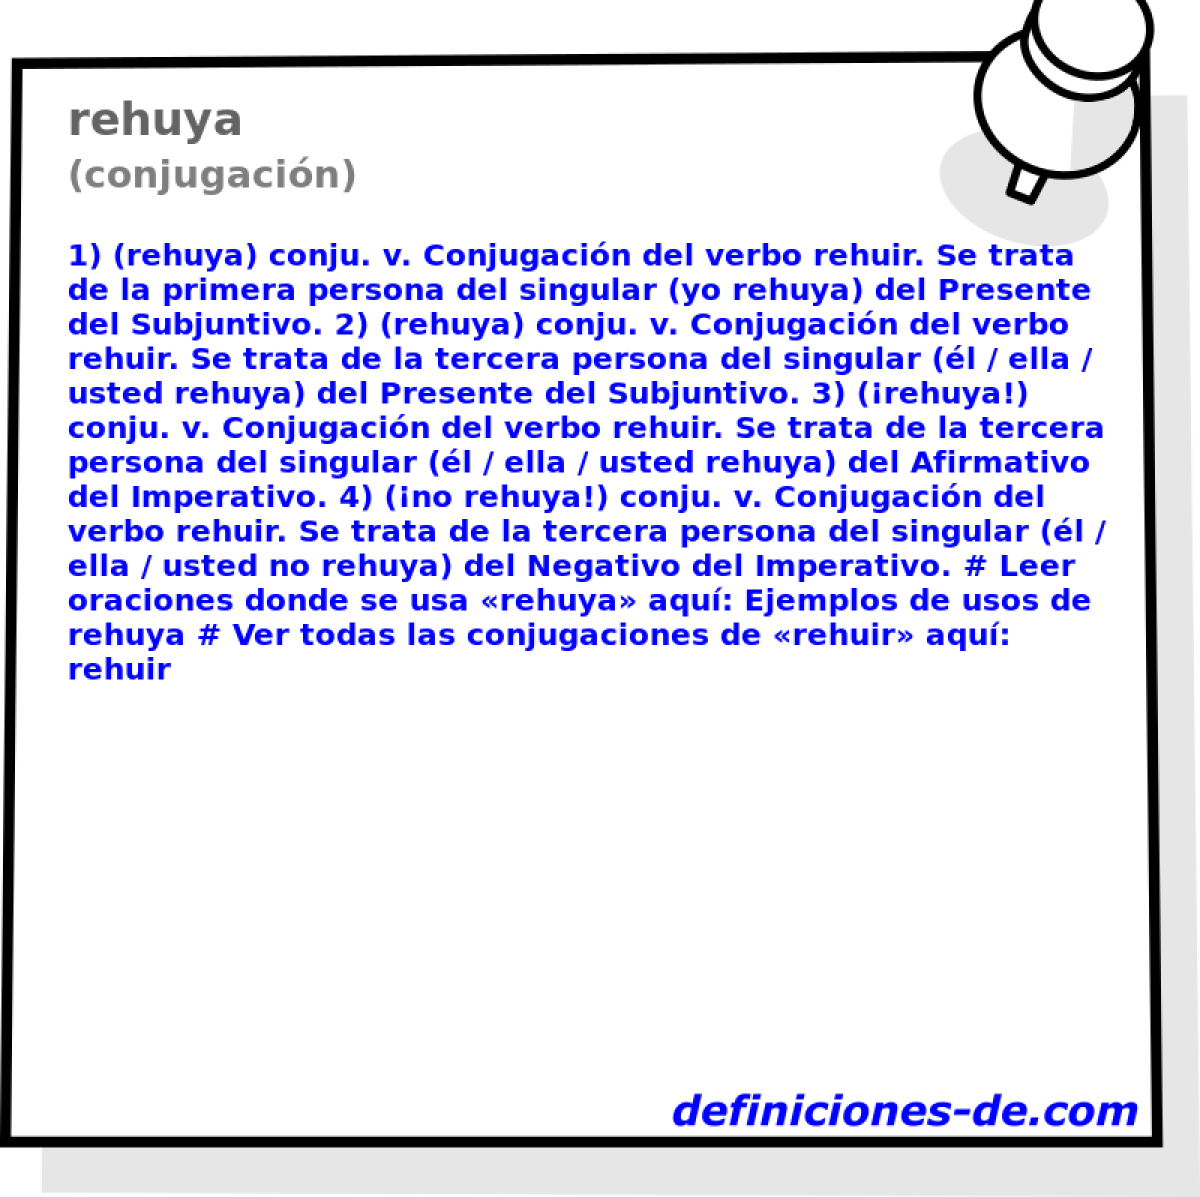 rehuya (conjugacin)